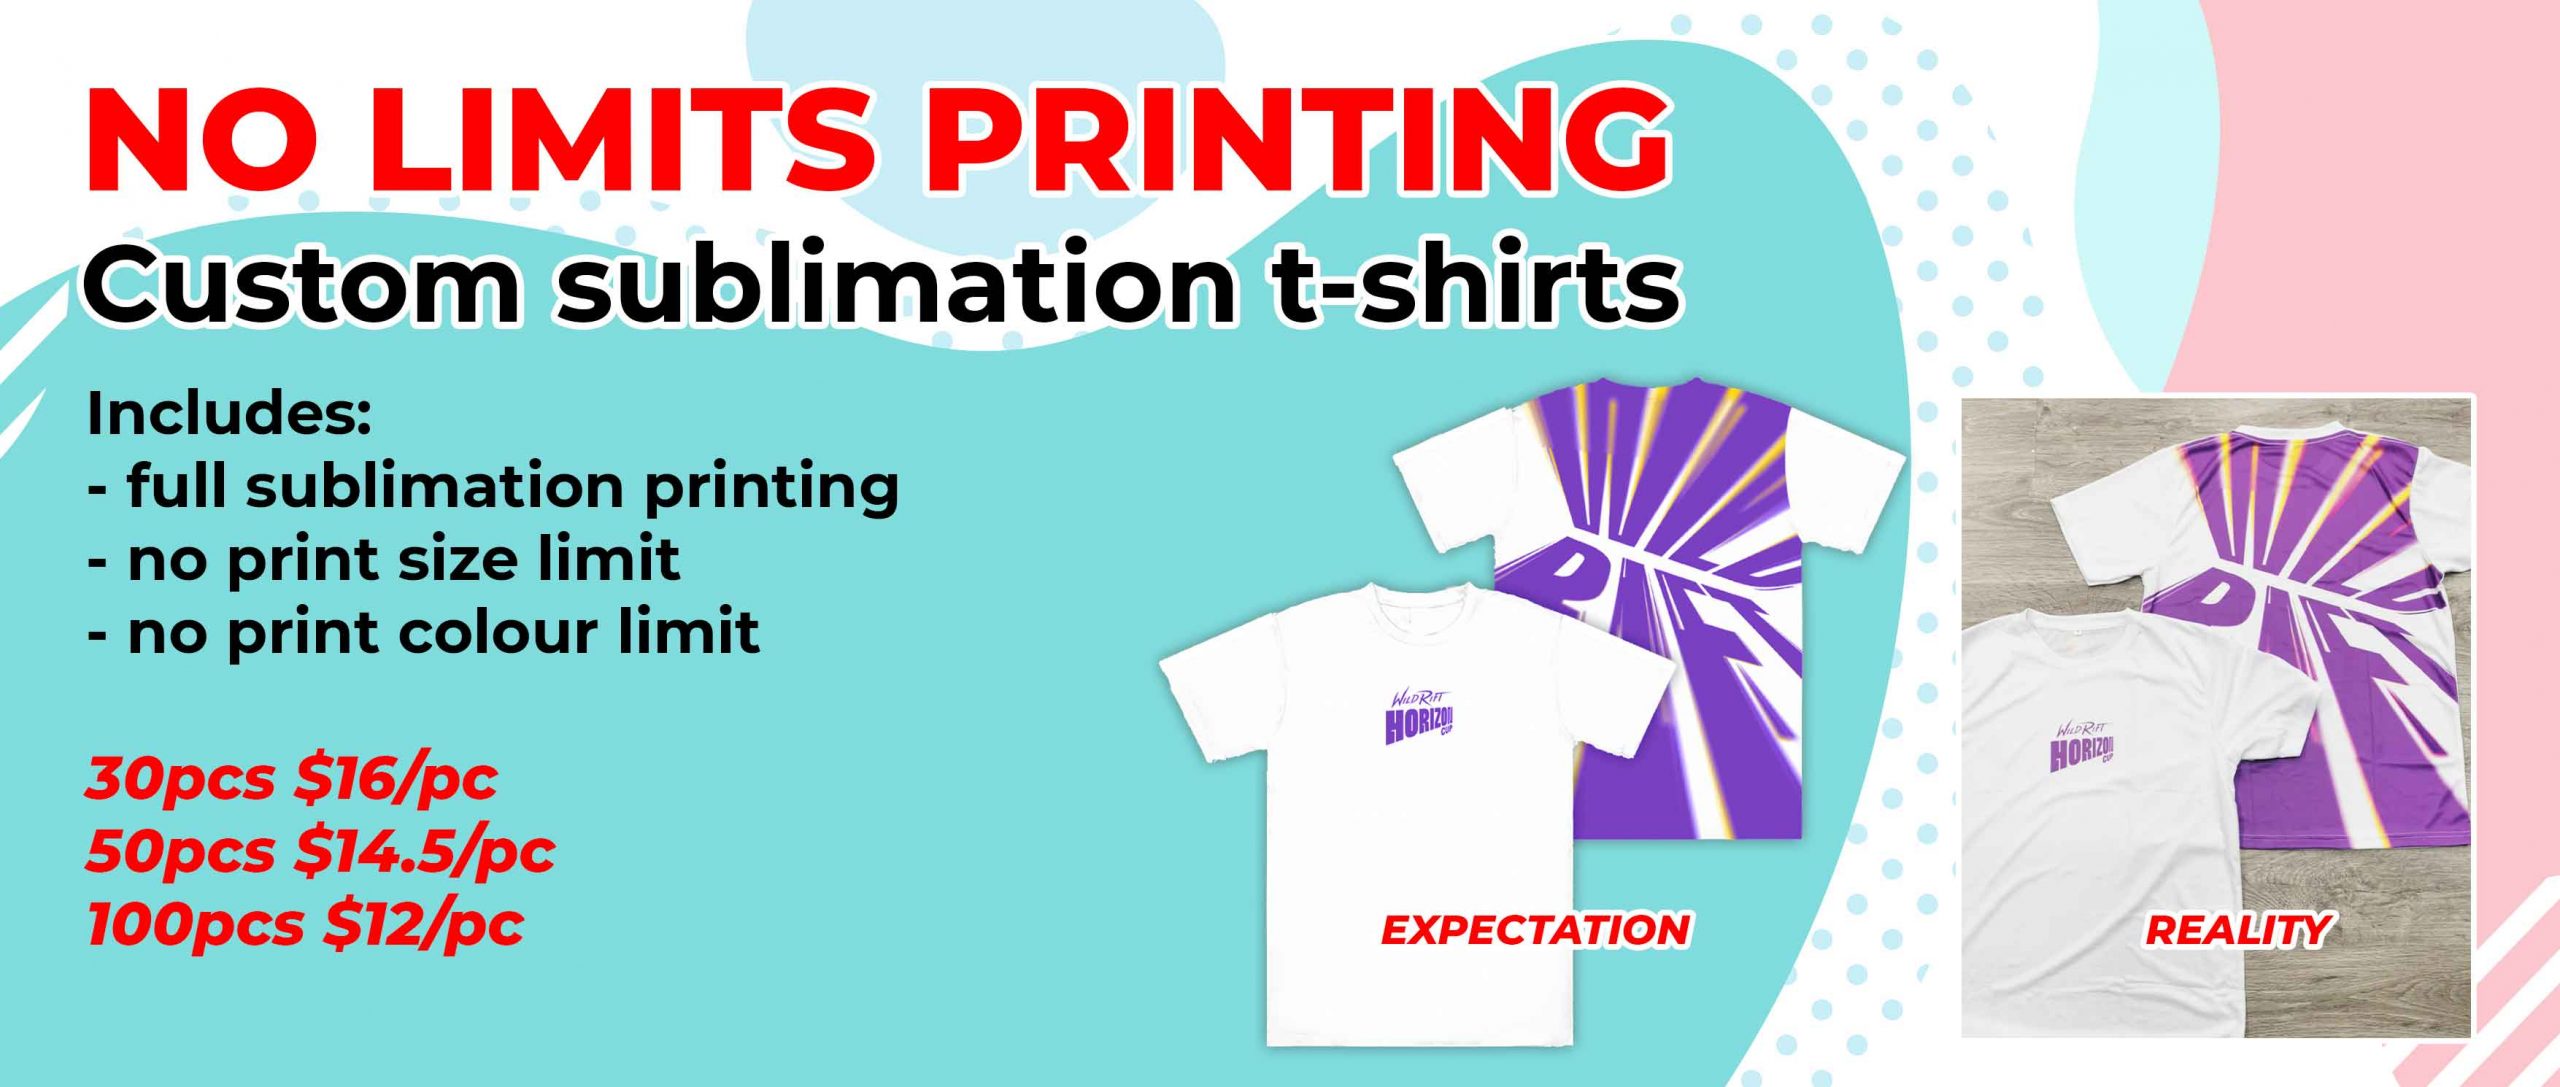 custom sublimation t shirt printing scaled